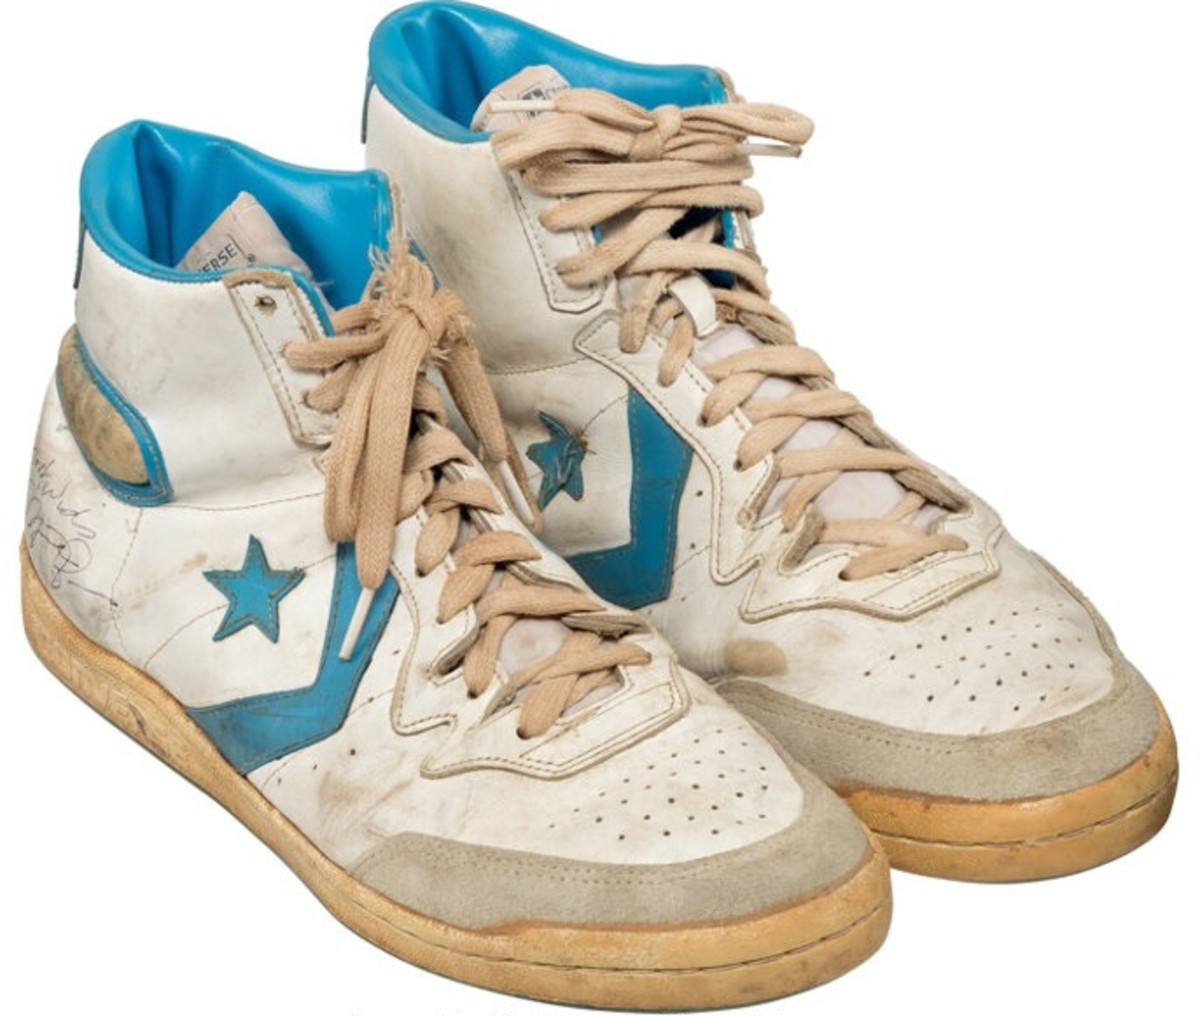 Michael Jordan's Converse Sneakers from 